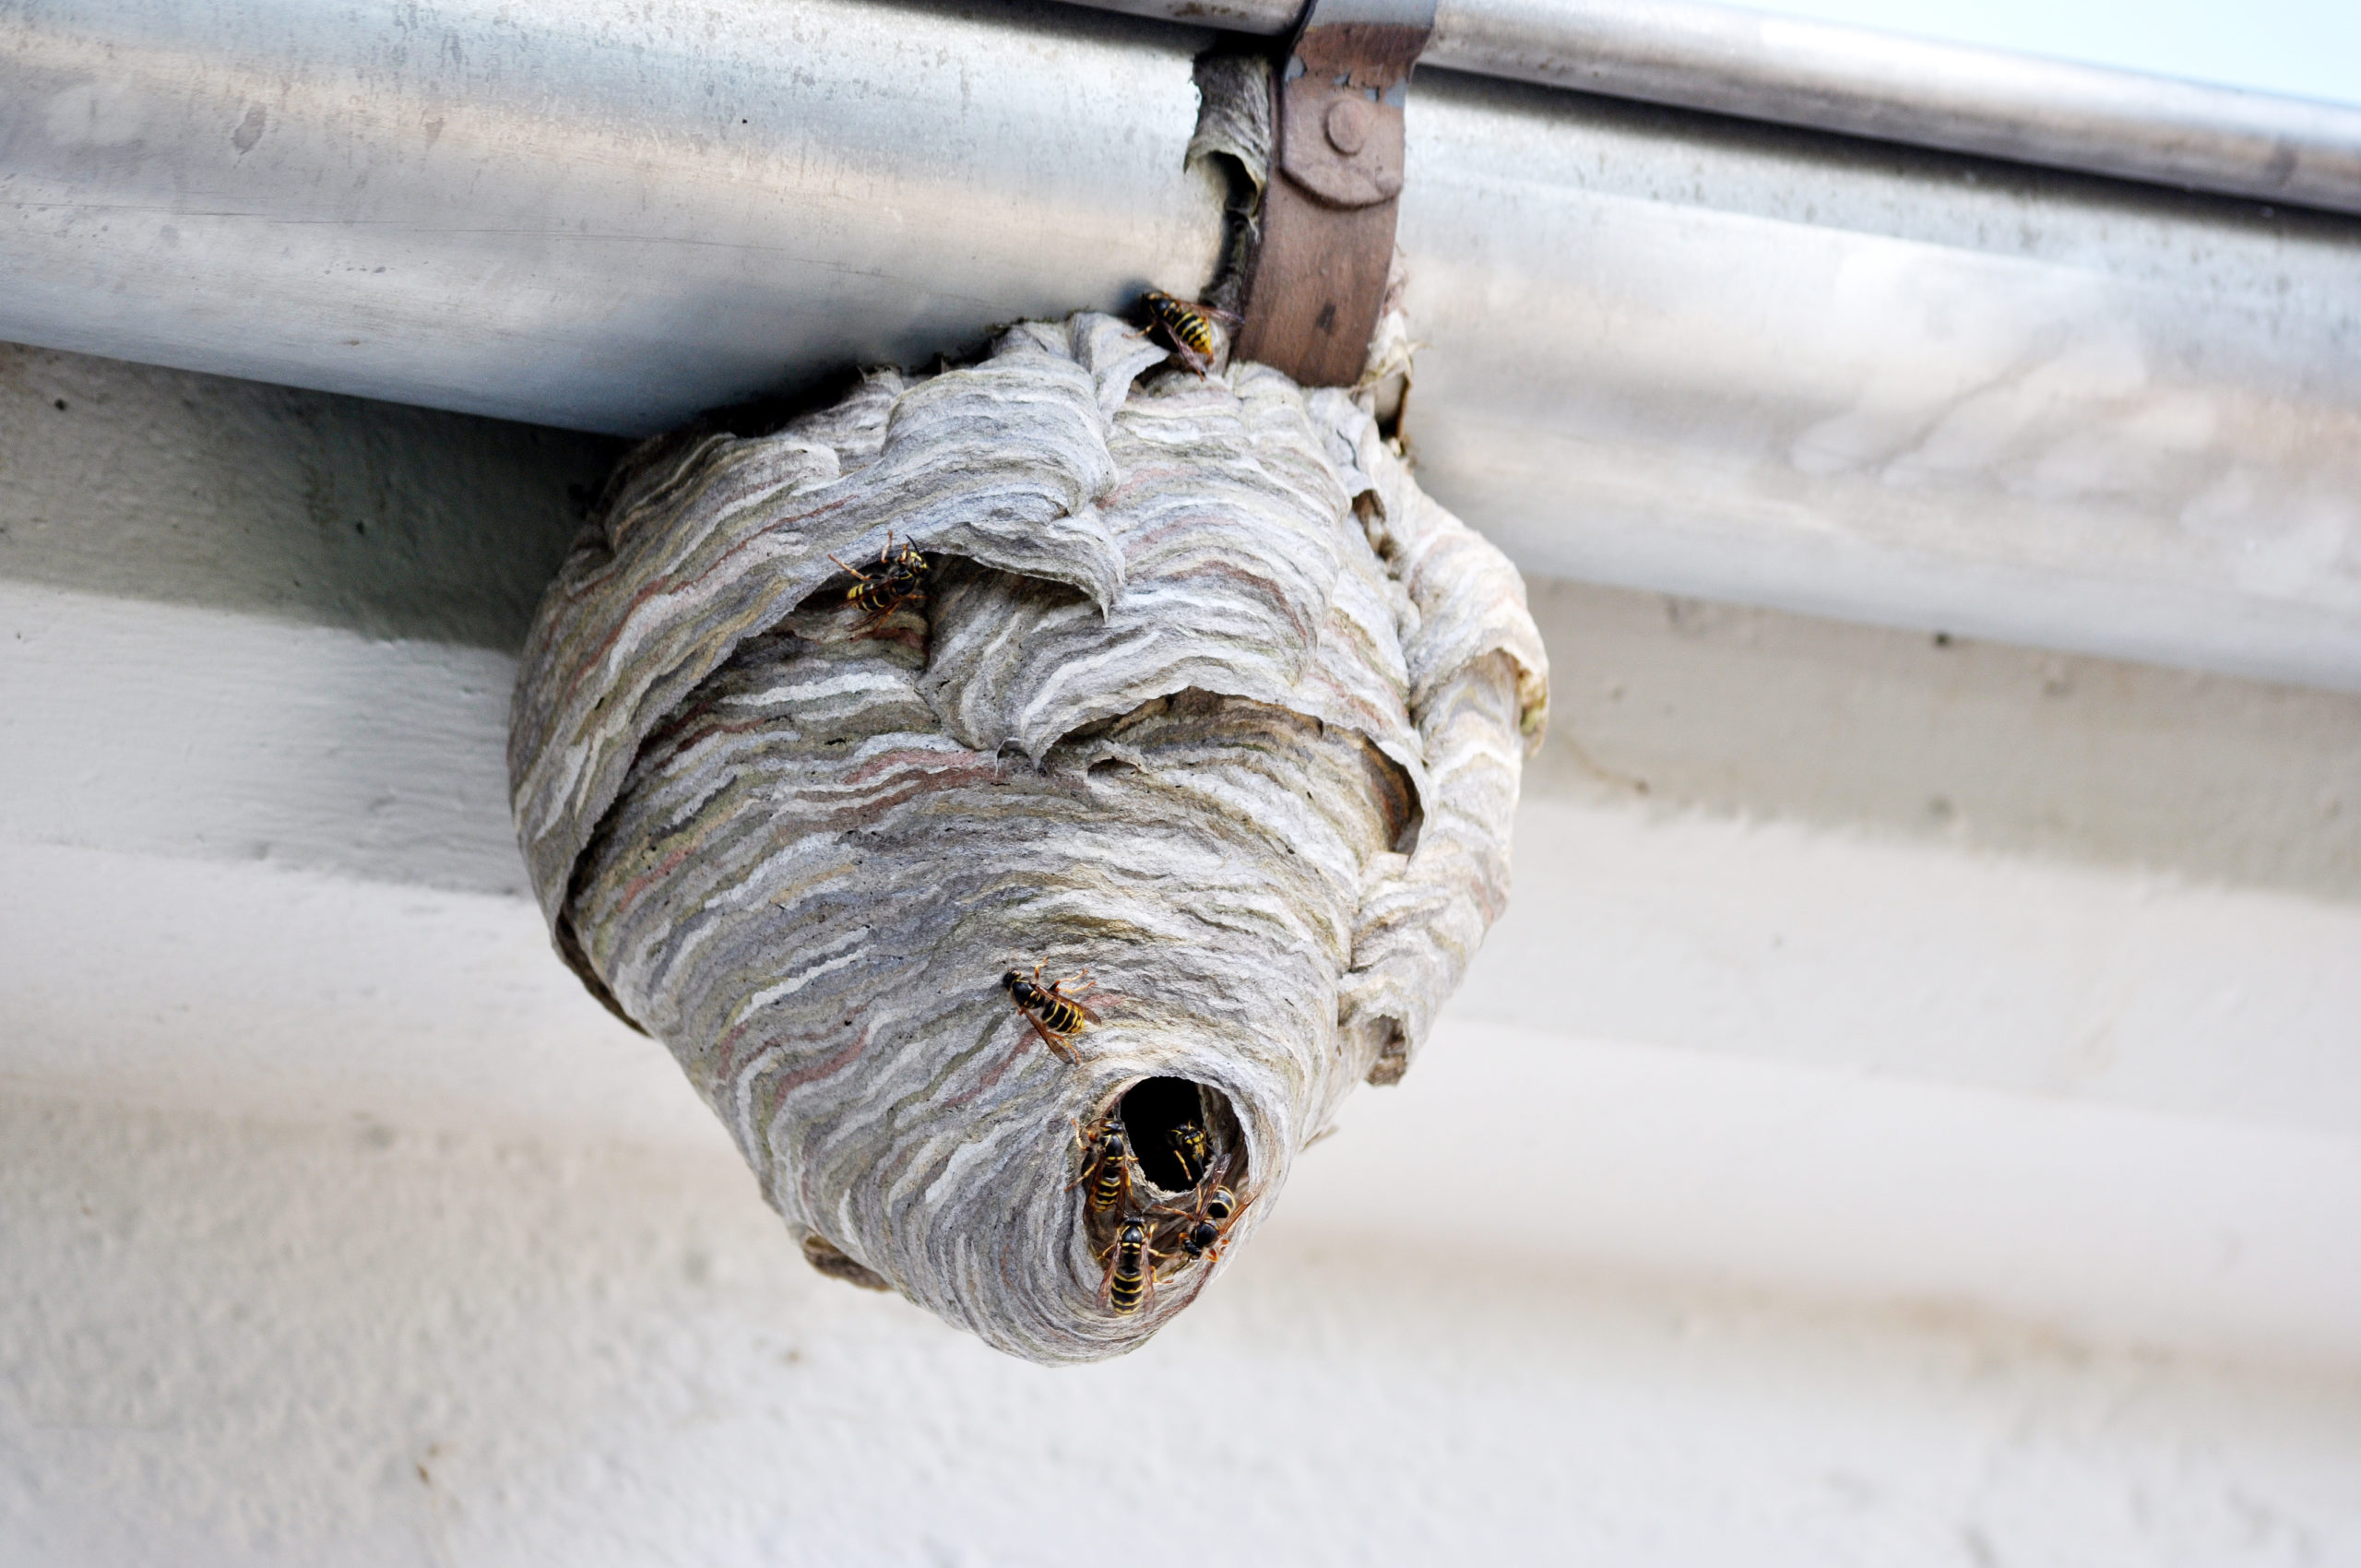 wasp nest underneath a gutter